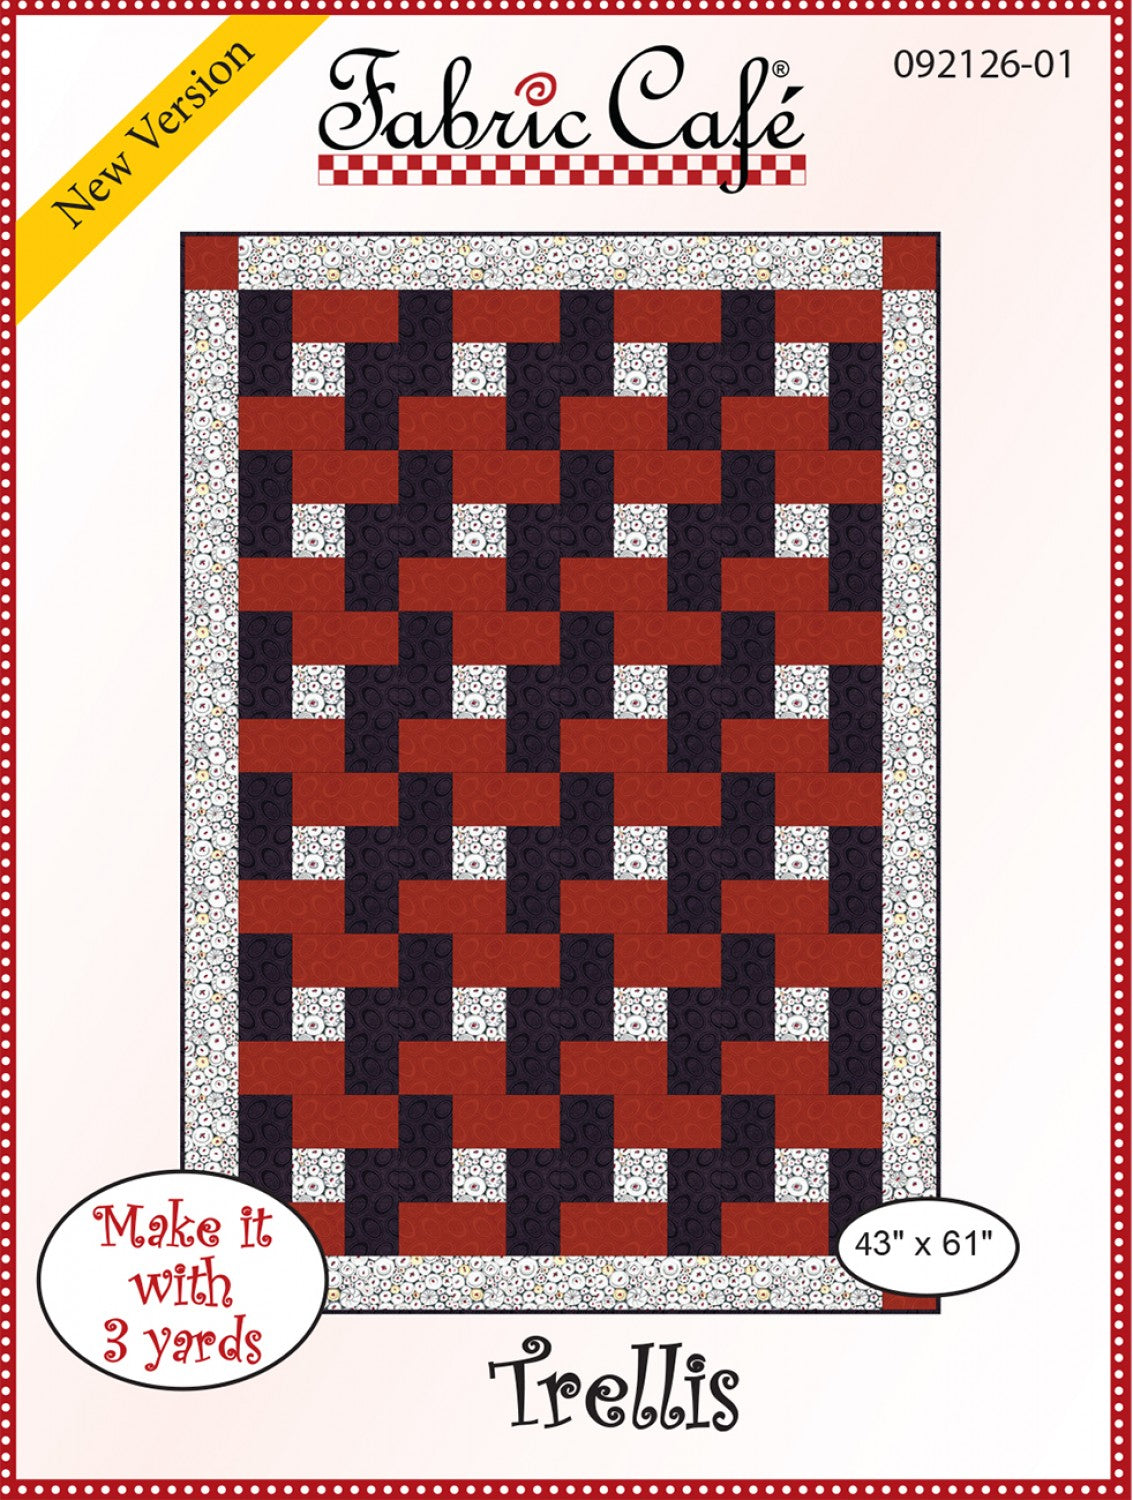 Trellis - Quilt Pattern - Fabric Cafe